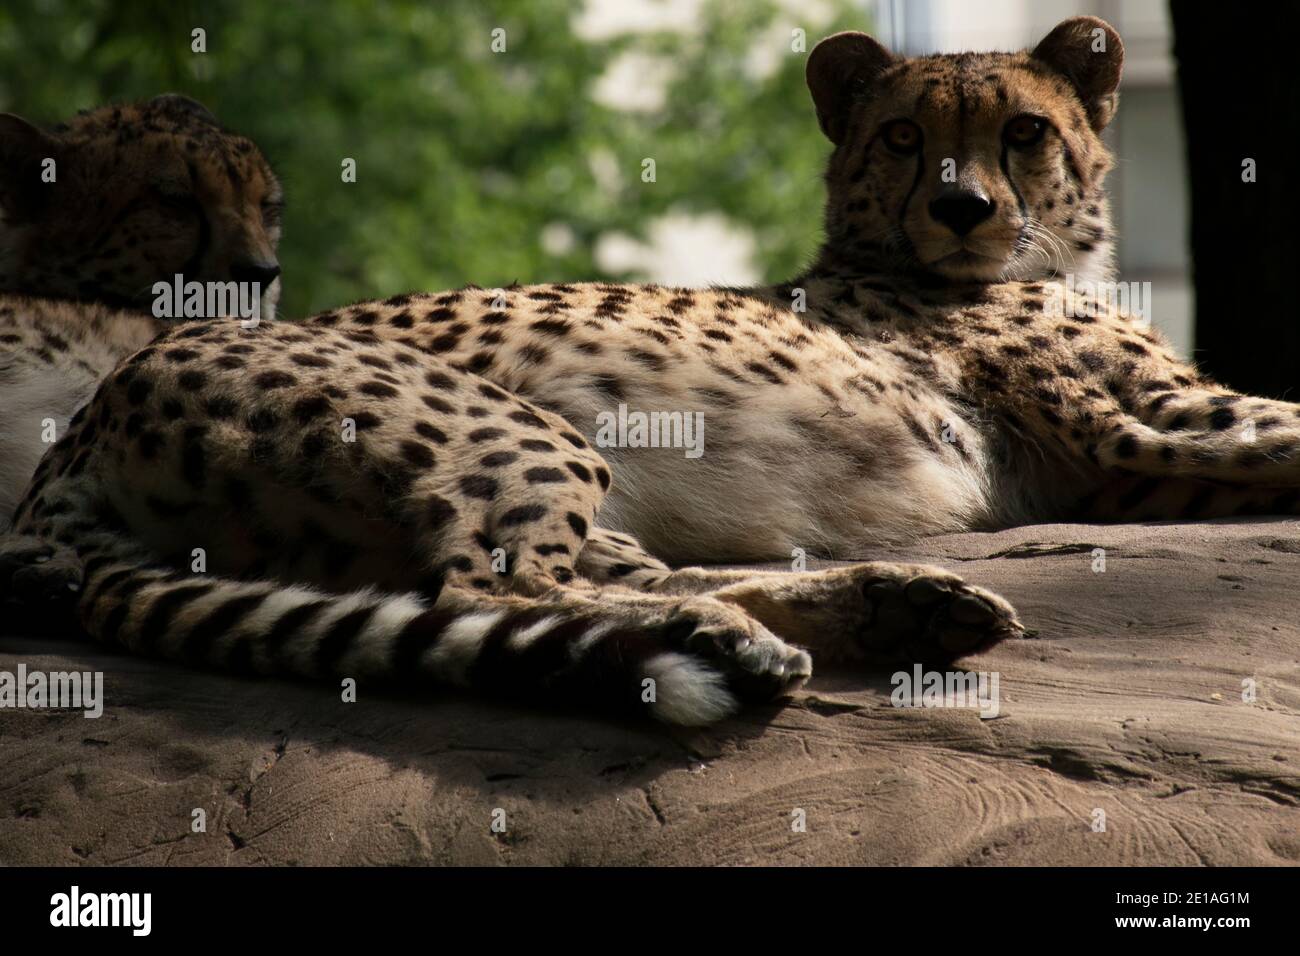 Wild Cheetah in African Safari in Serengeti resting and stretching in sunlight Stock Photo